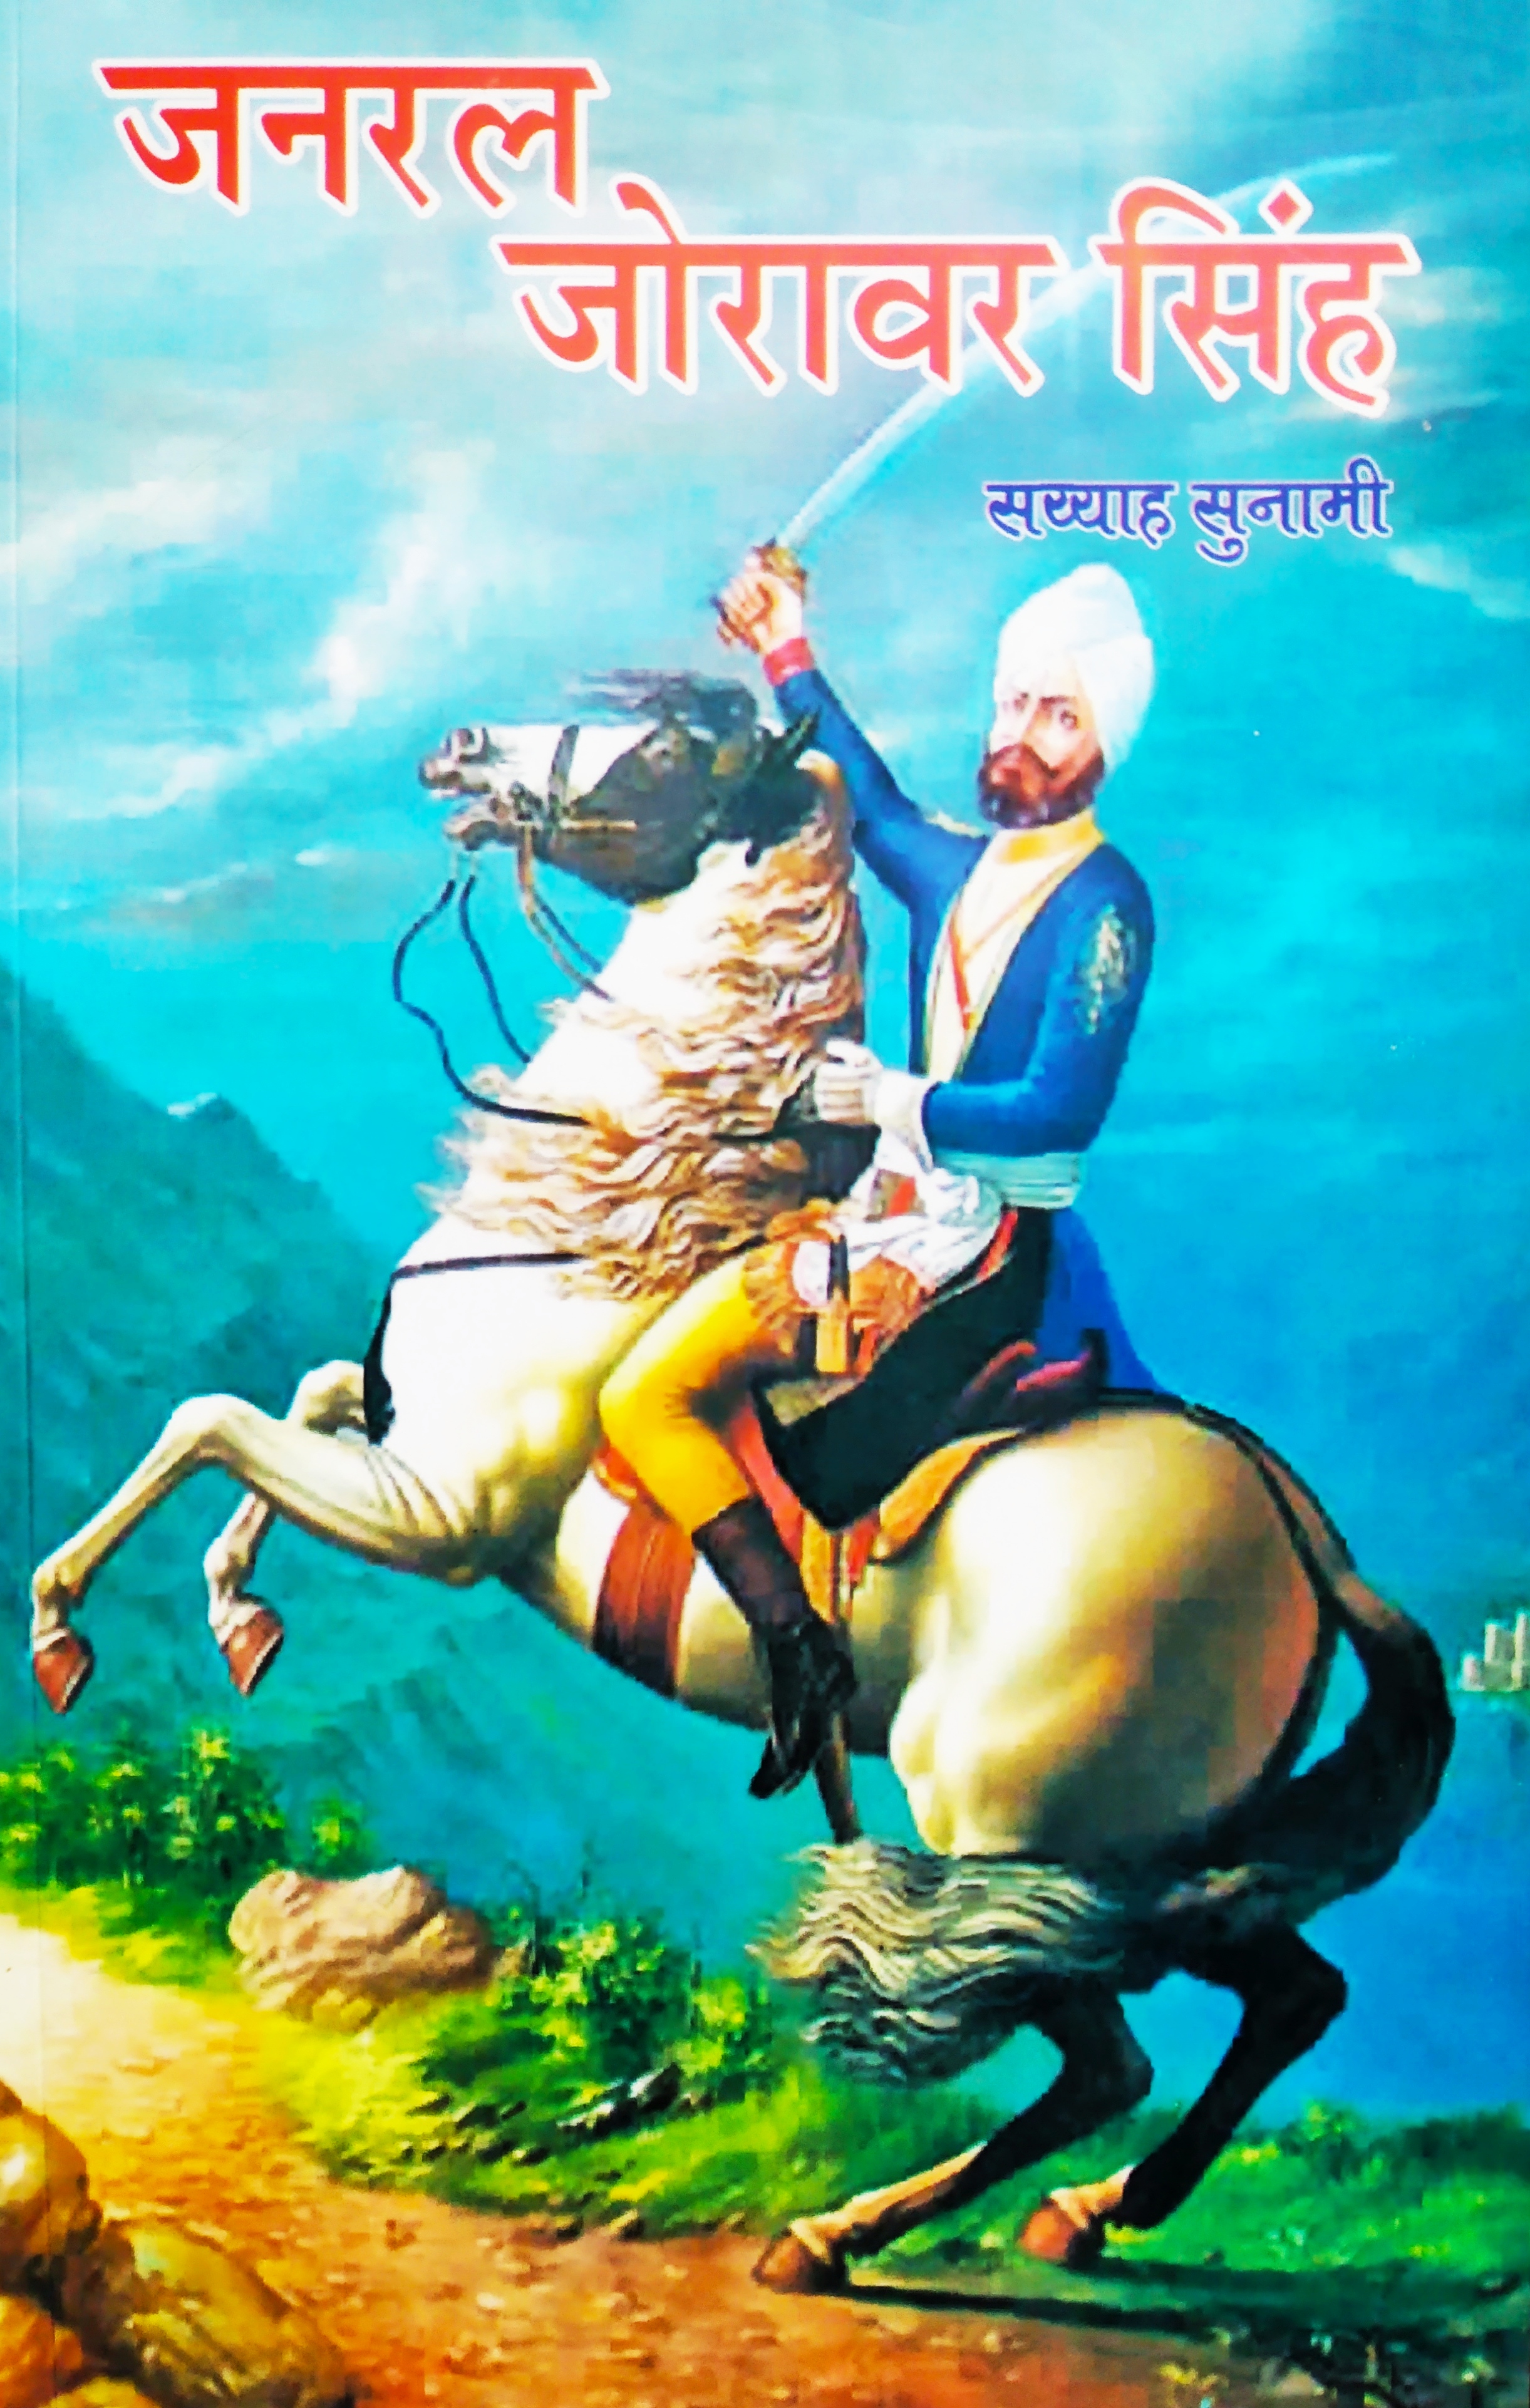 General Joravar Singh